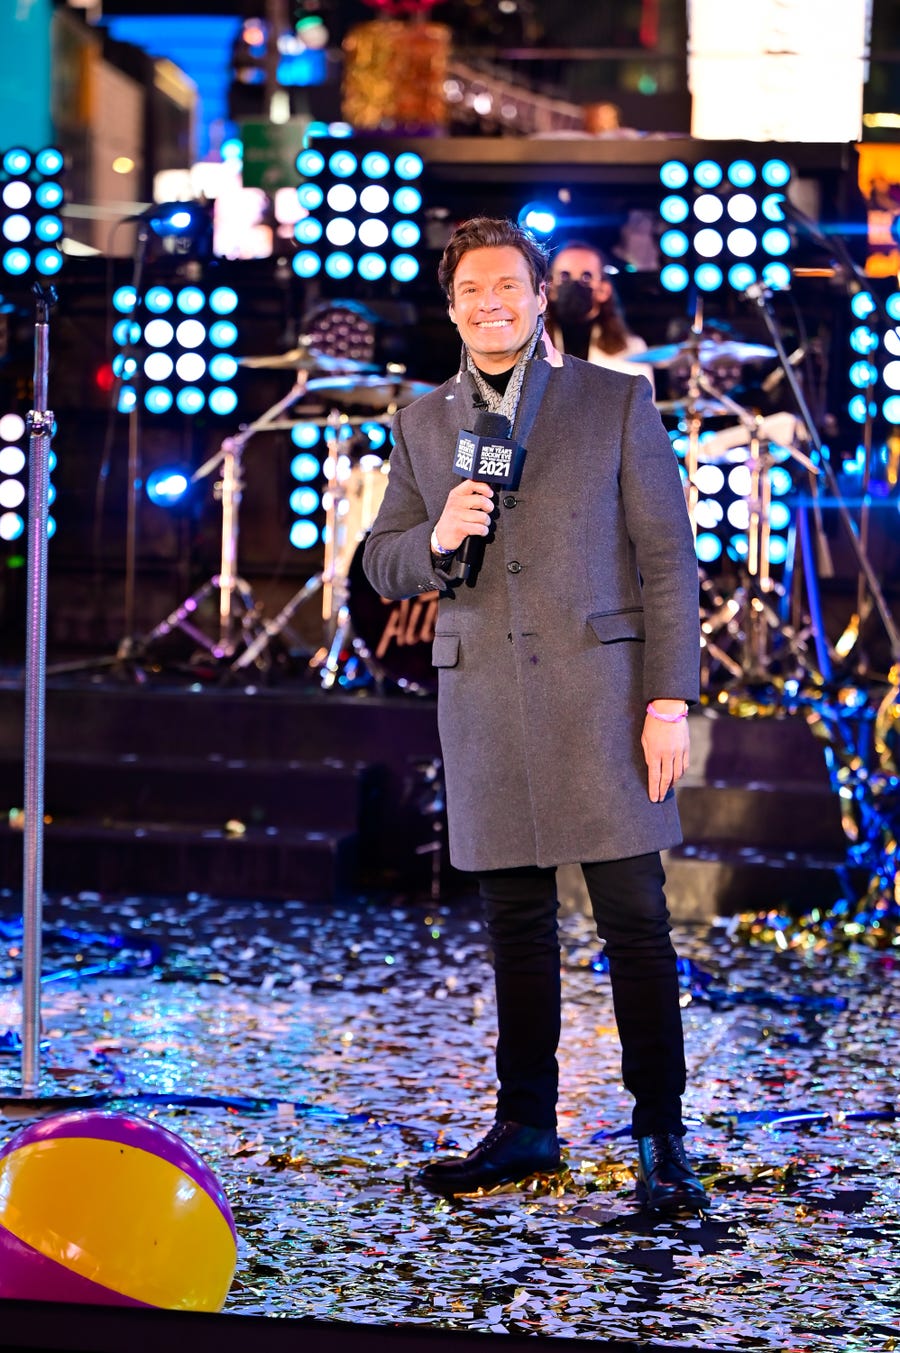 Ryan Seacrest welcomed 2021 in hosting "Dick Clark's New Year's Rockin' Eve with Ryan Seacrest."